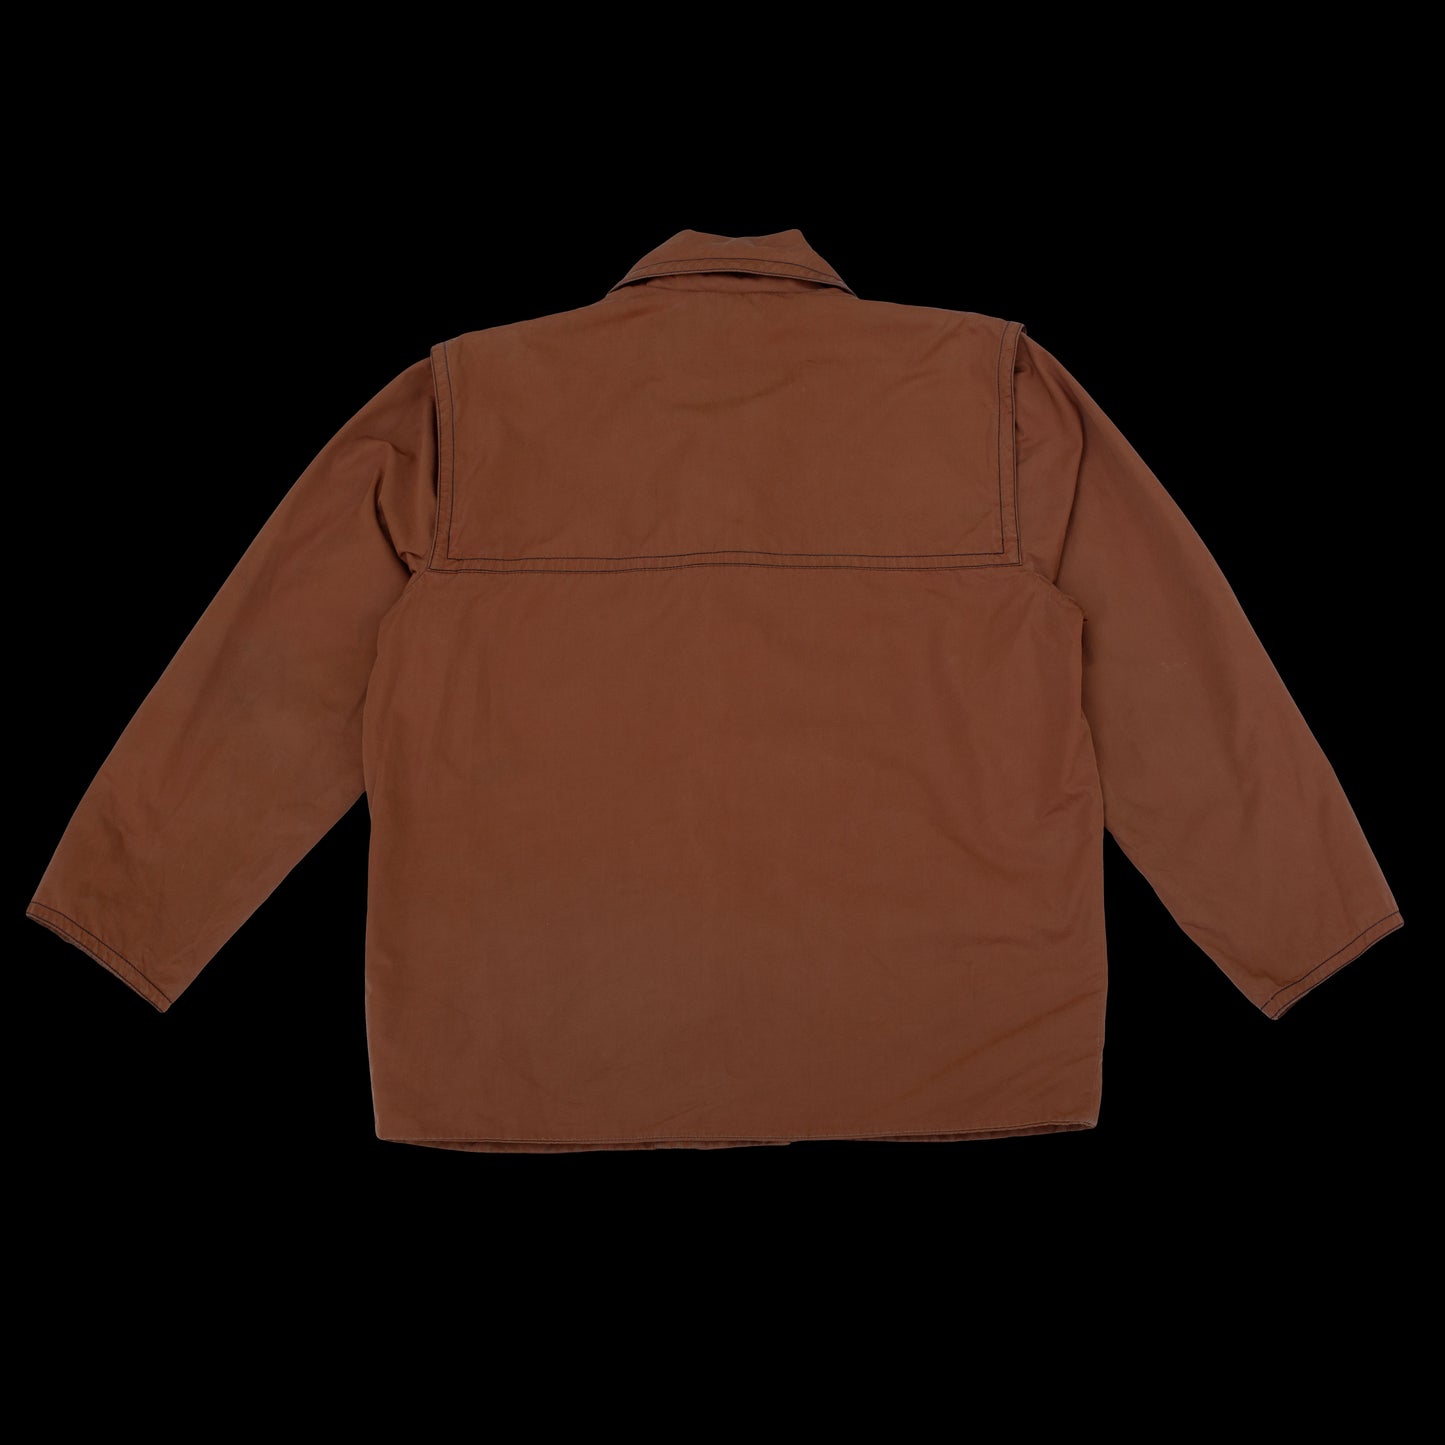 Vintage 1930s 1940s Rust Brown Cotton Gaberdine Toggle Button Jacket